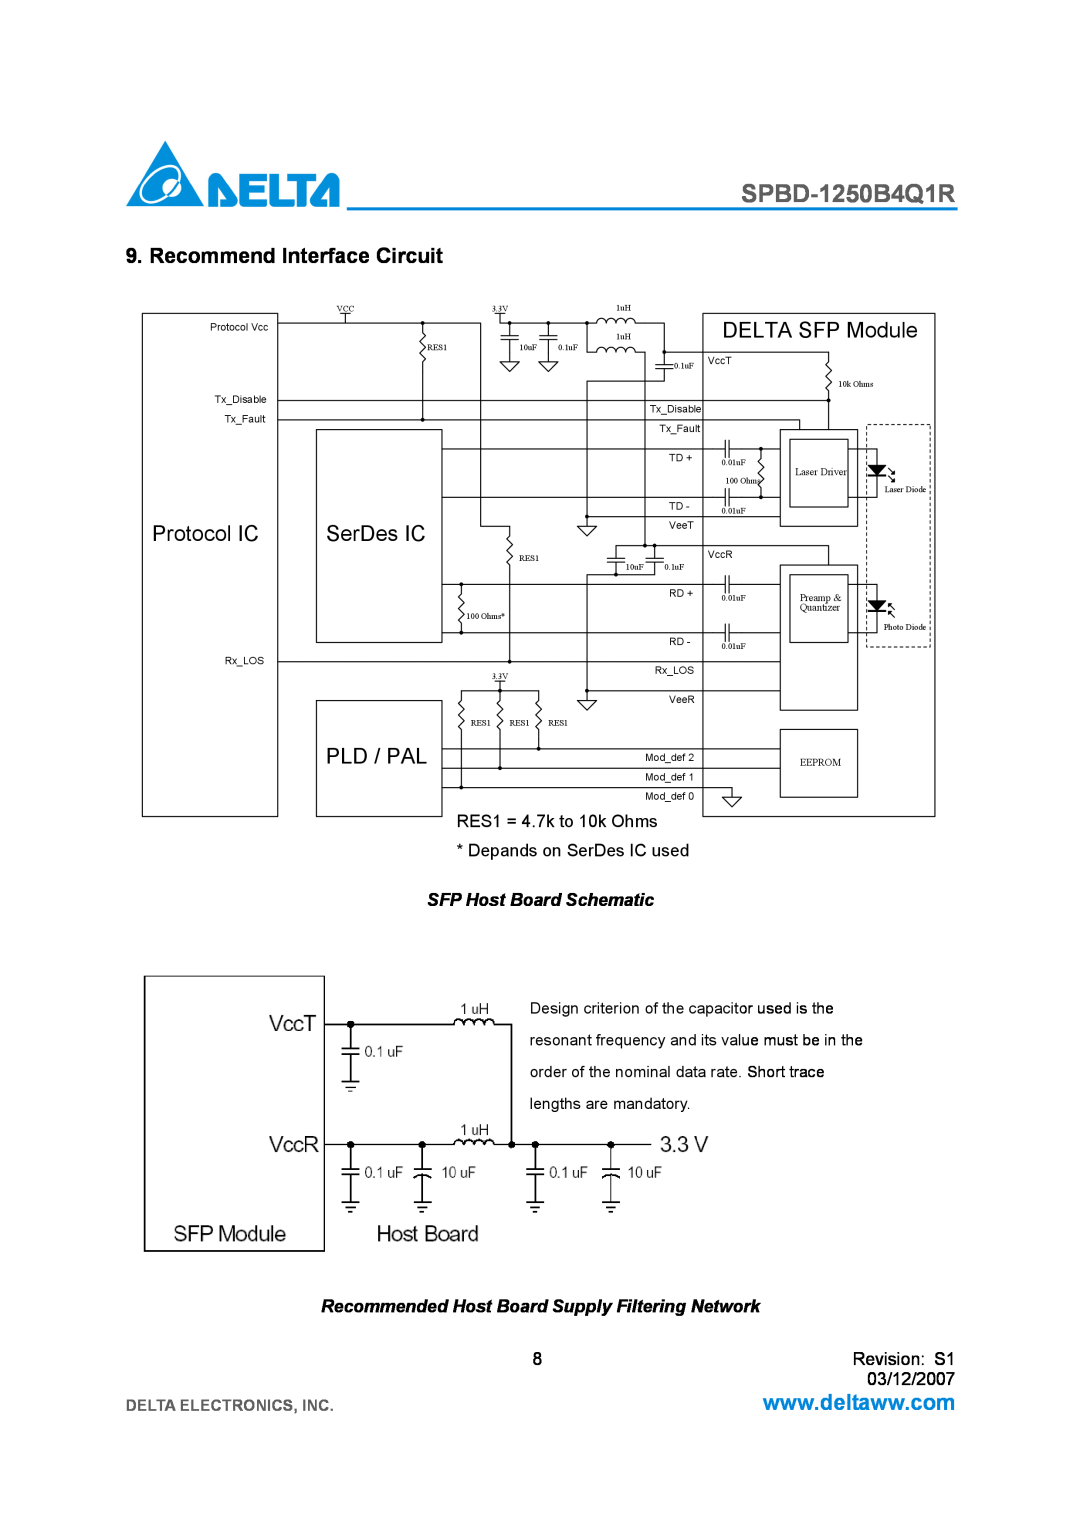 Delta Electronics SPBD-1250B4Q1R manual SFP Host Board Schematic, Protocol IC, SerDes IC, DELTA SFP Module, Pld / Pal 